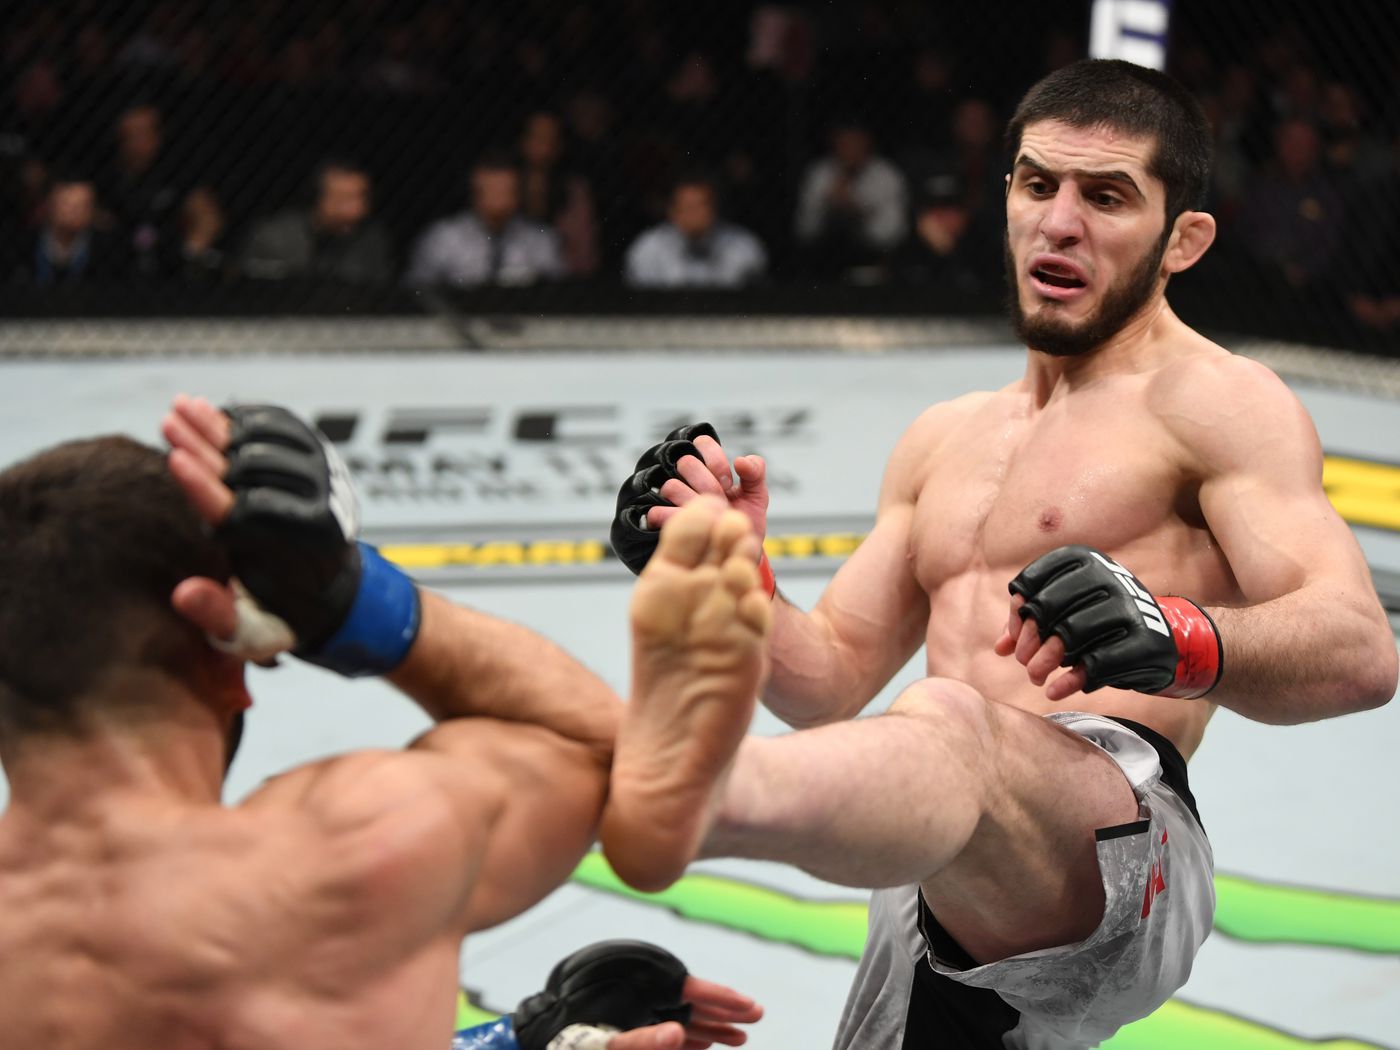 UFC 242 card: Islam Makhachev vs Davi Ramos full fight preview